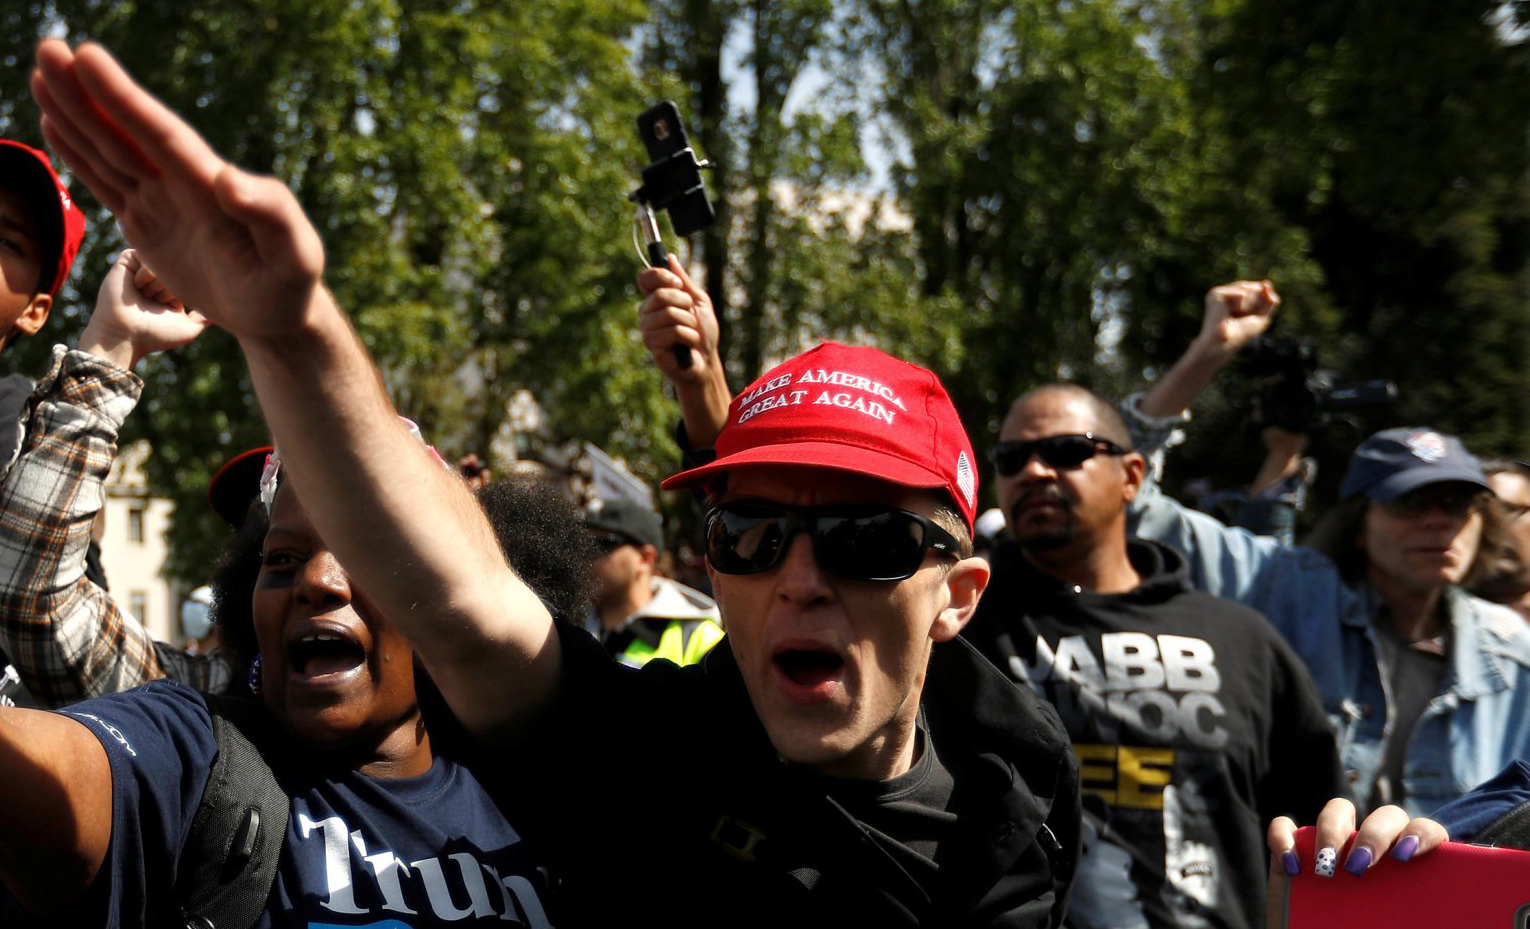 Demonstrators in support of U.S. President Donald Trump gesture during a rally in Berkeley, California.